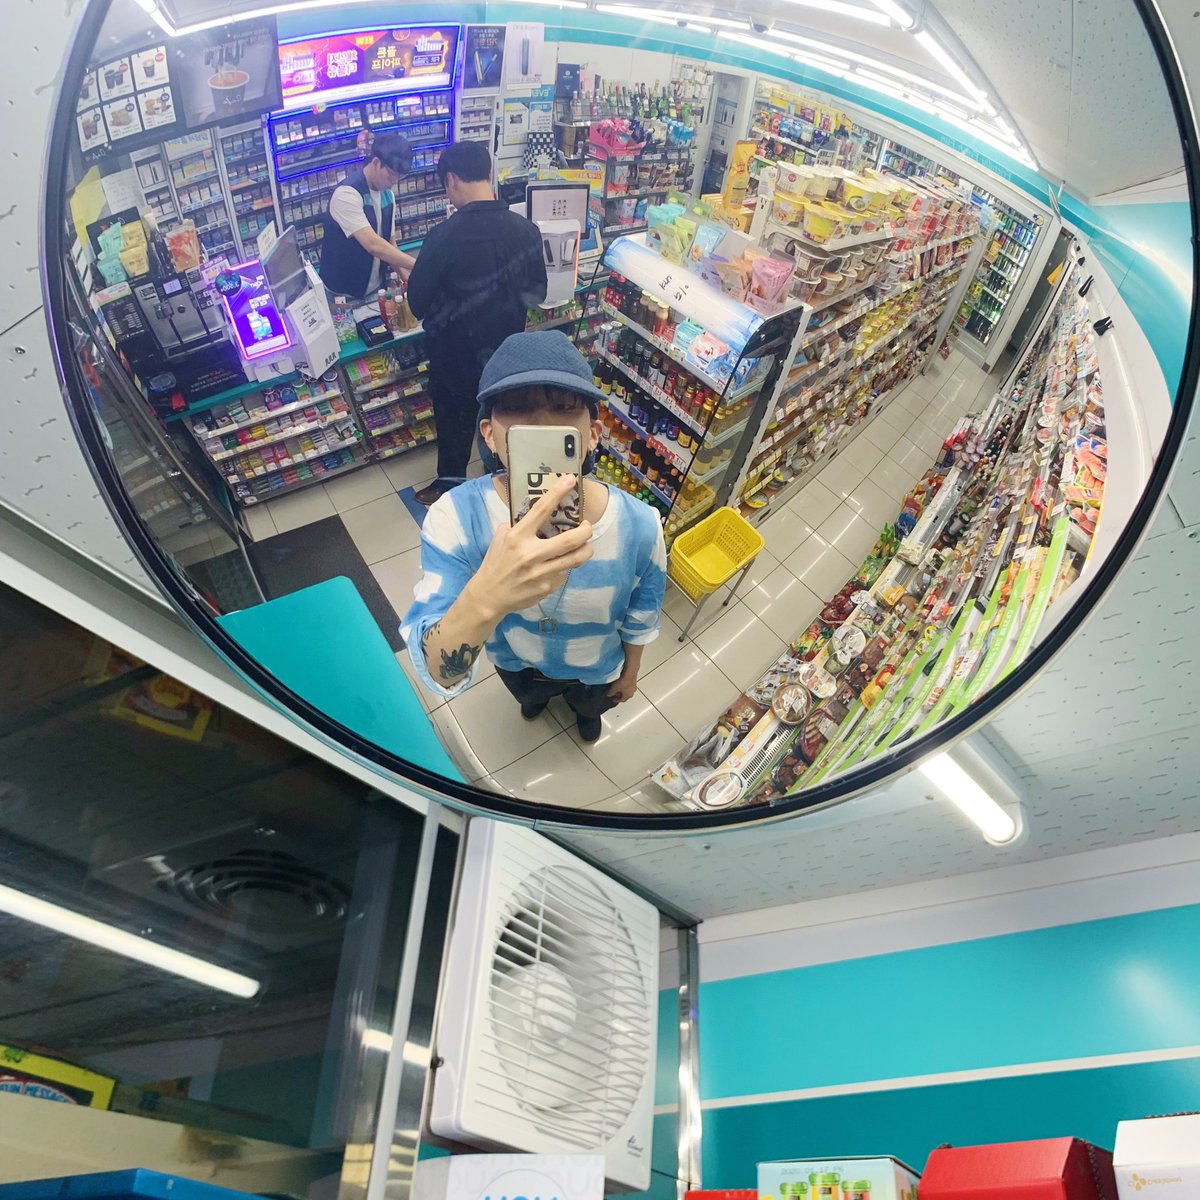 Colde on Twitter: "Convenience Store Selfie 😈 https://t.co/hQwWODRdLq" /  Twitter